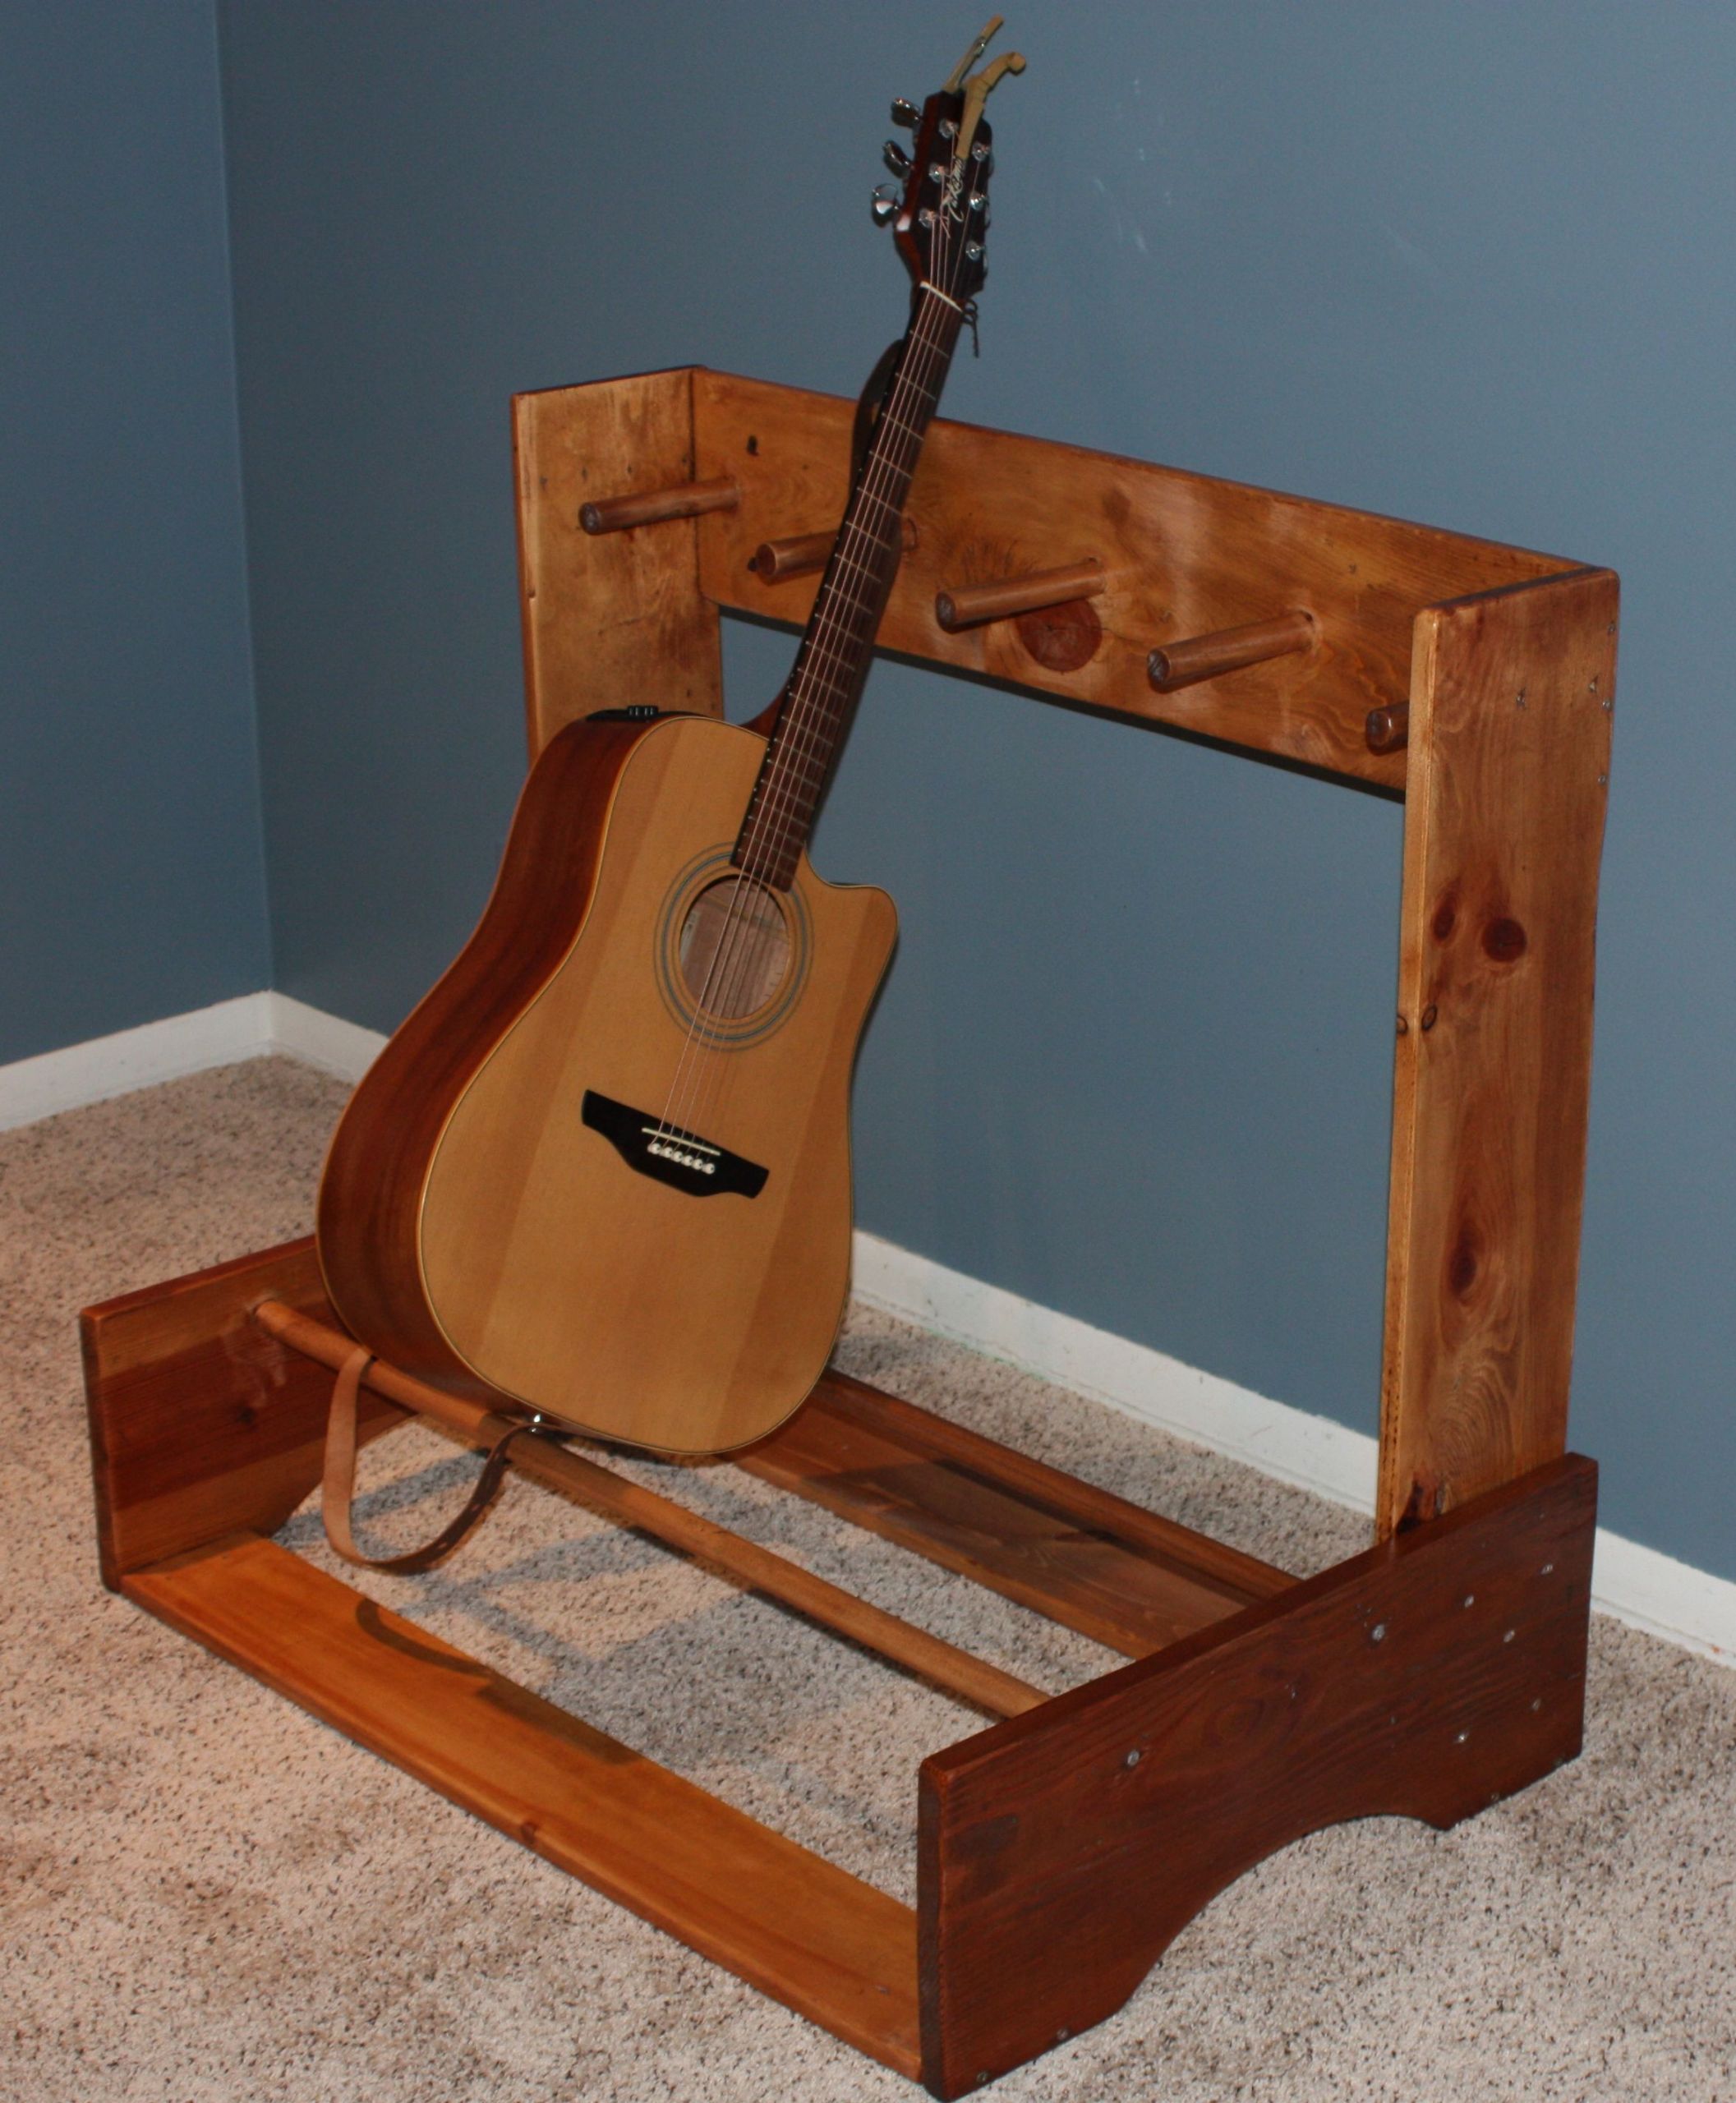 DIY Guitar Rack
 I made this Guitar Stand designed for 4 guitars in case I